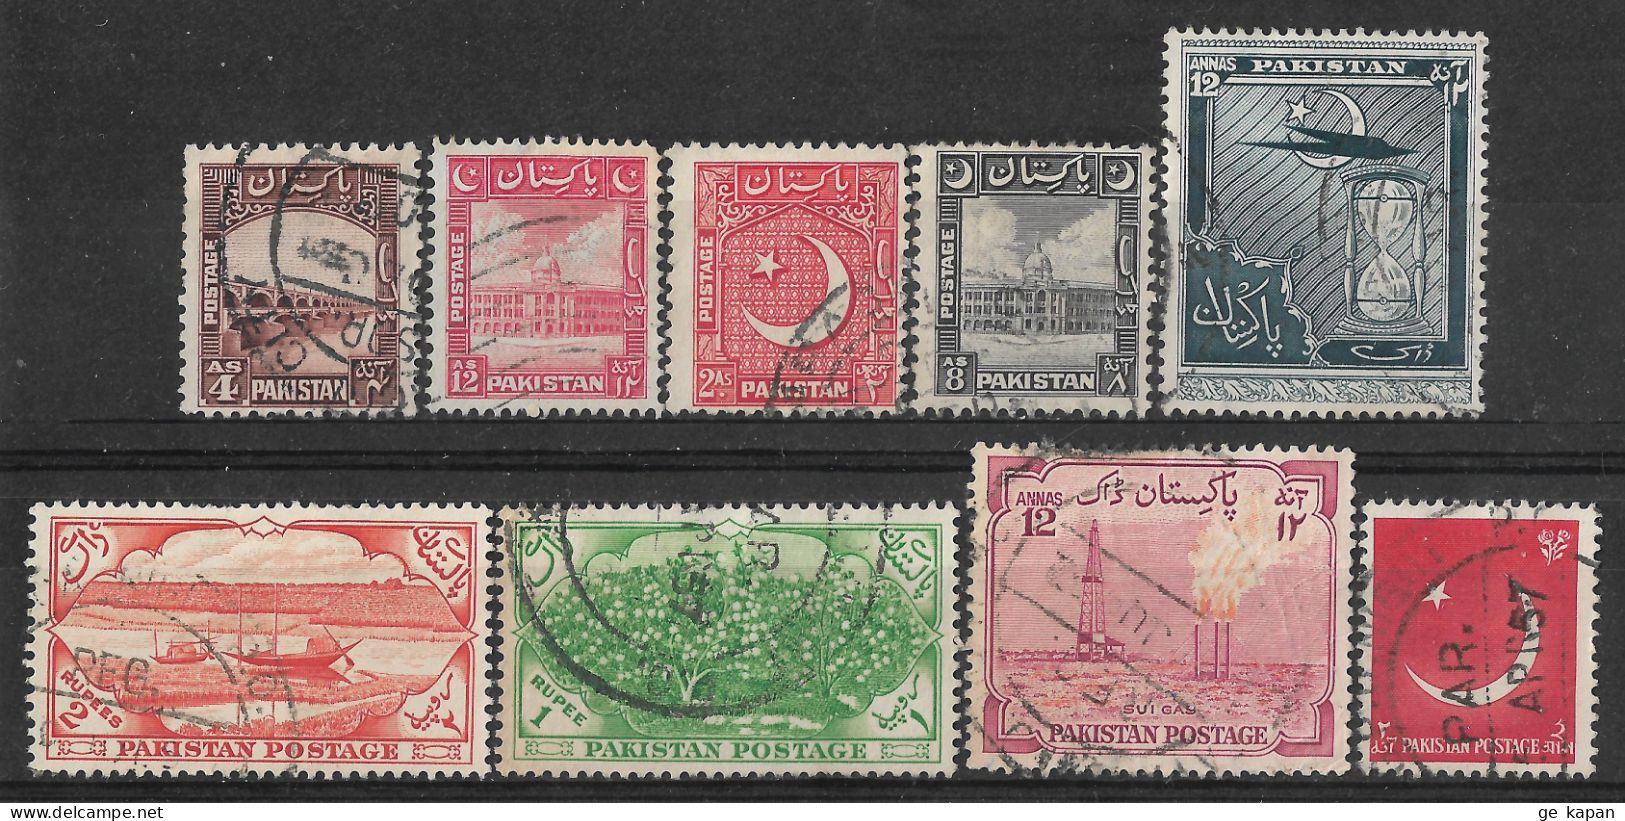 1948-1956 PAKISTAN Set Of 9 USED STAMPS (Michel # 33,37,49A,52,62,70,71,76,83) CV €3.80 - Pakistan